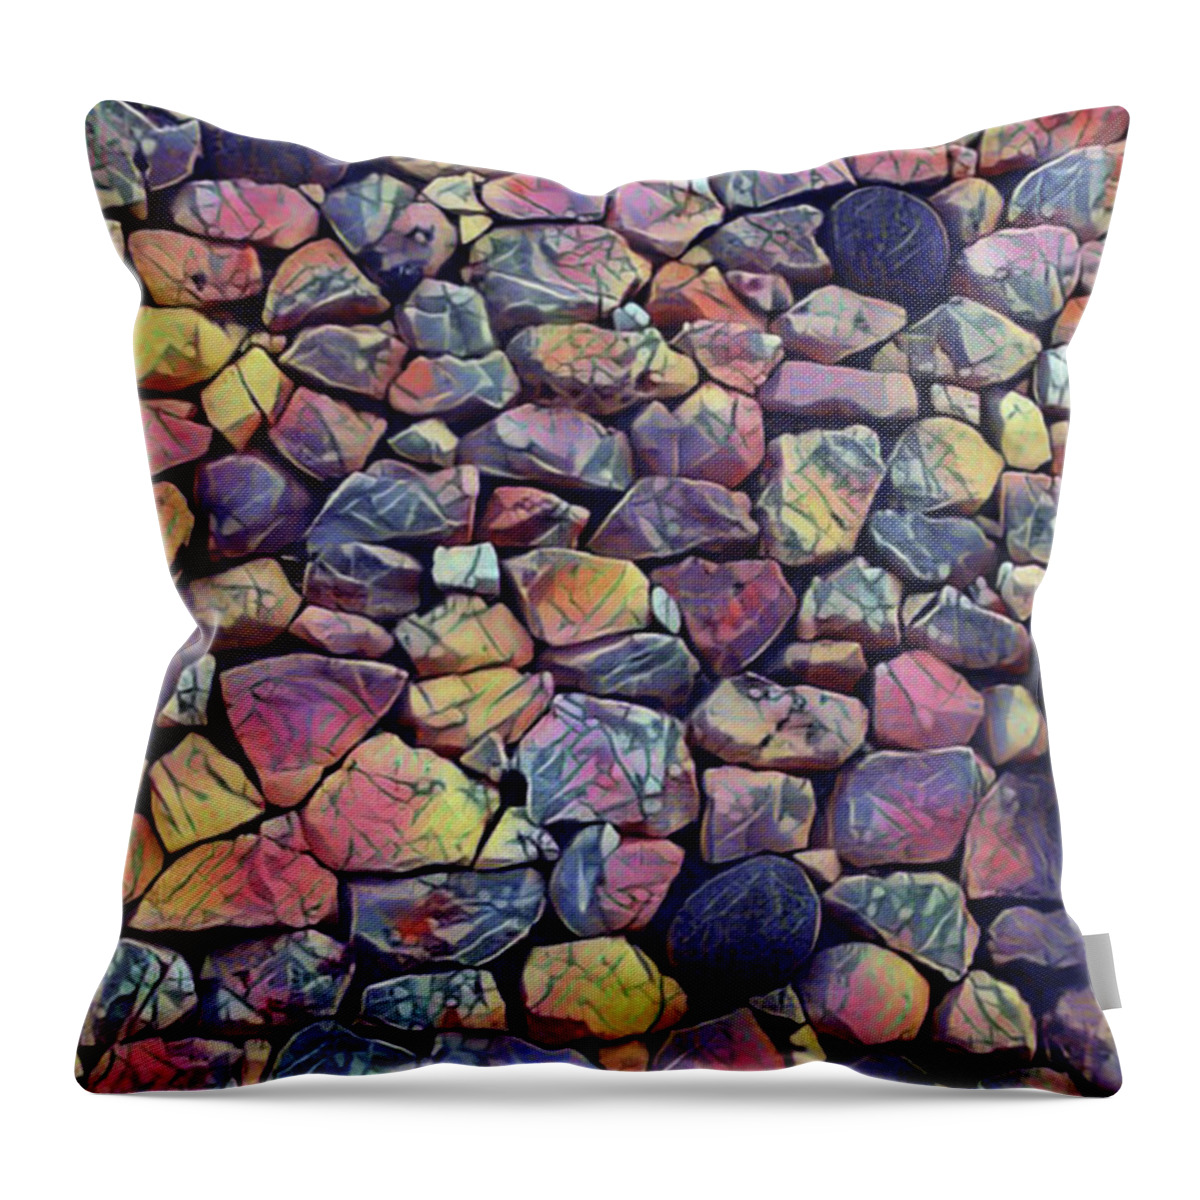 Ireland Throw Pillow featuring the digital art Newgrange Stones by Jackie MacNair